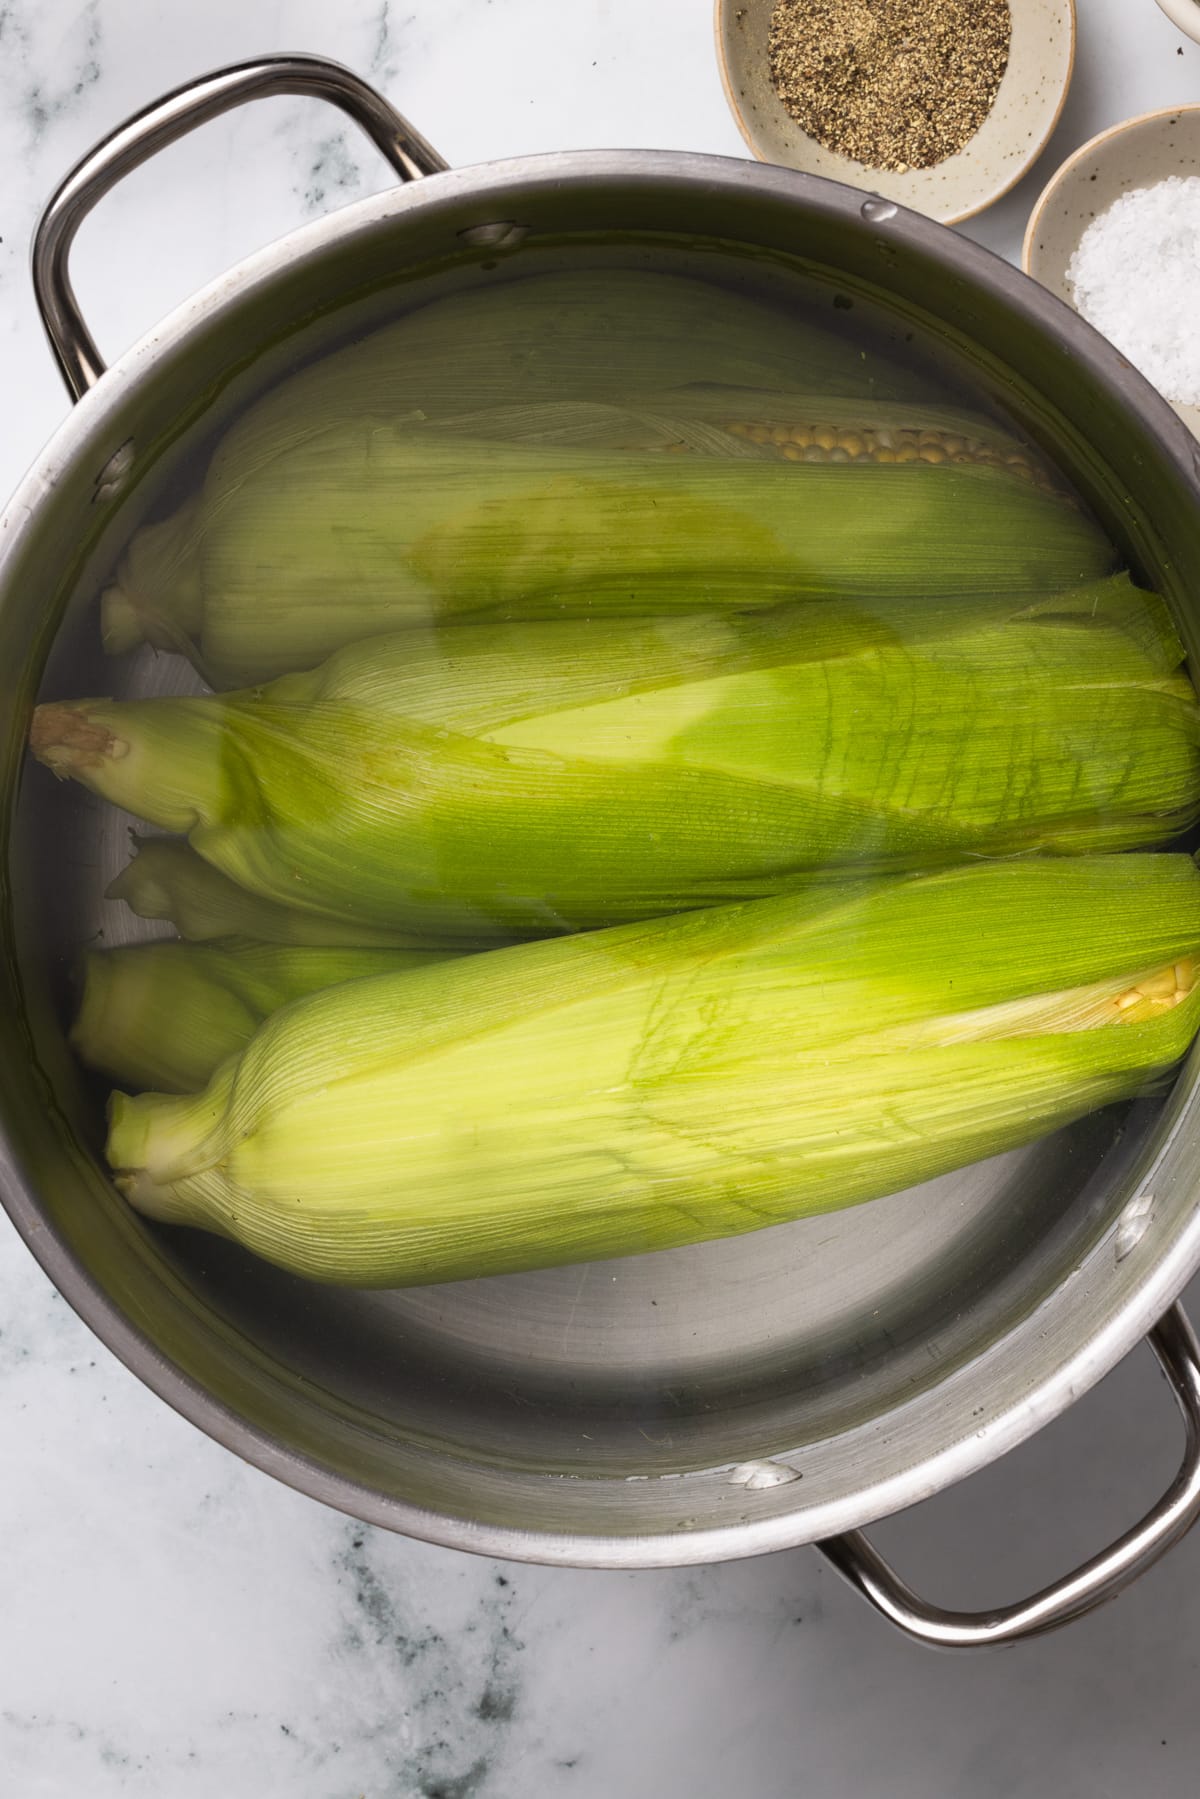 Soak corn in water